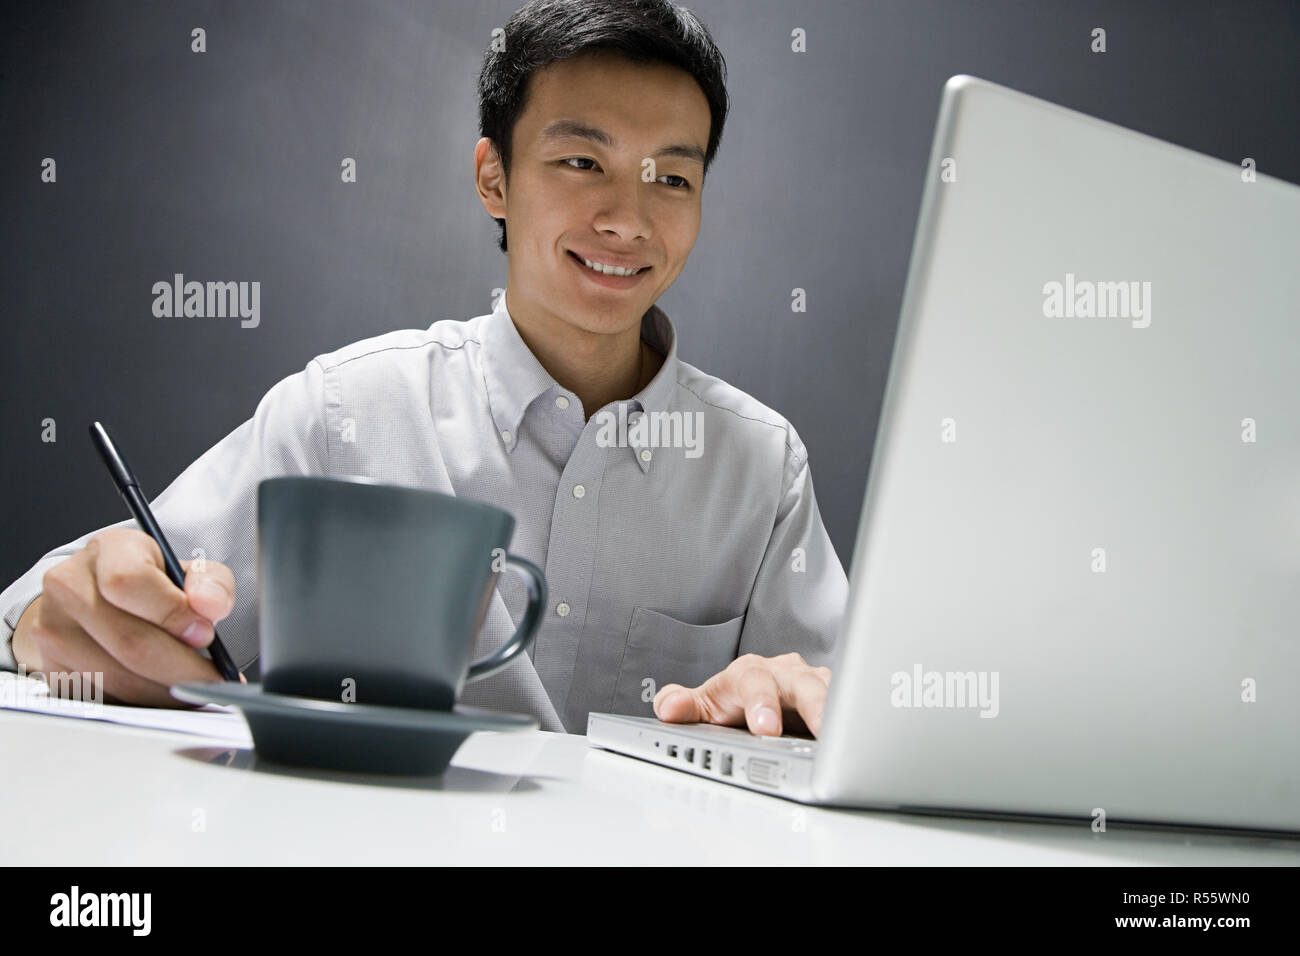 Man working on laptop Stock Photo